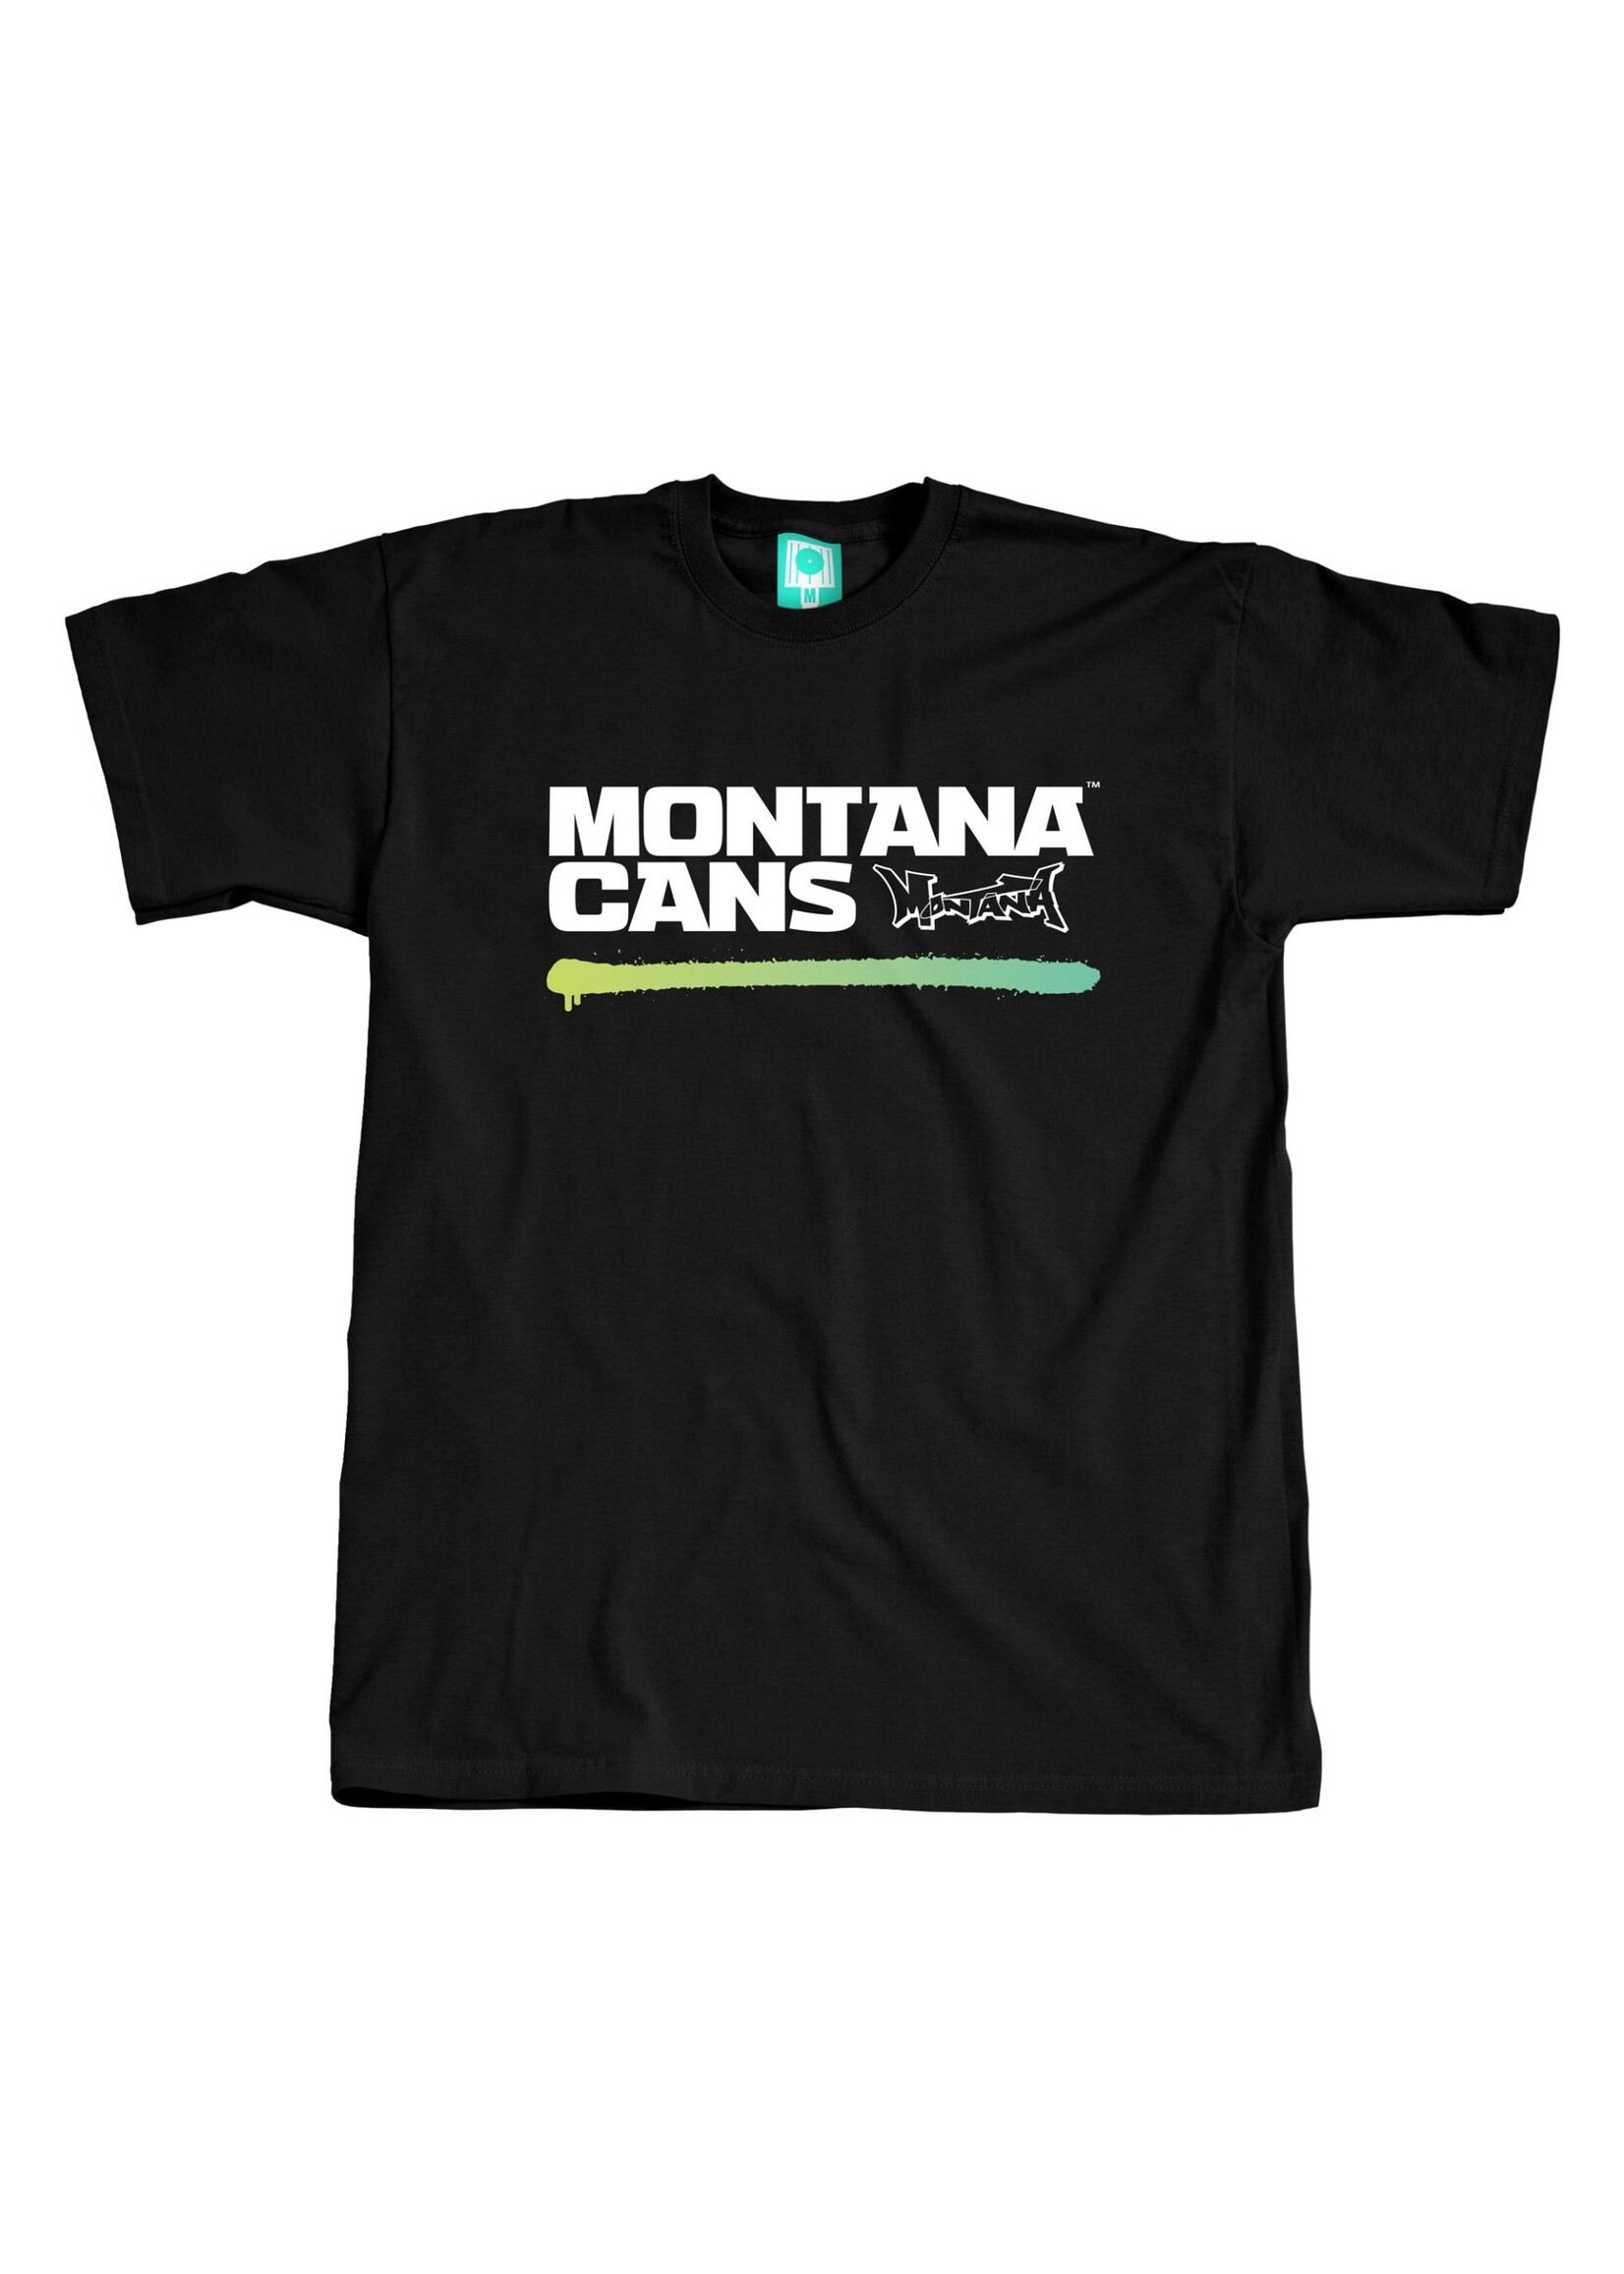 Montana Cans T-SHIRT Typo Logo Underline Black